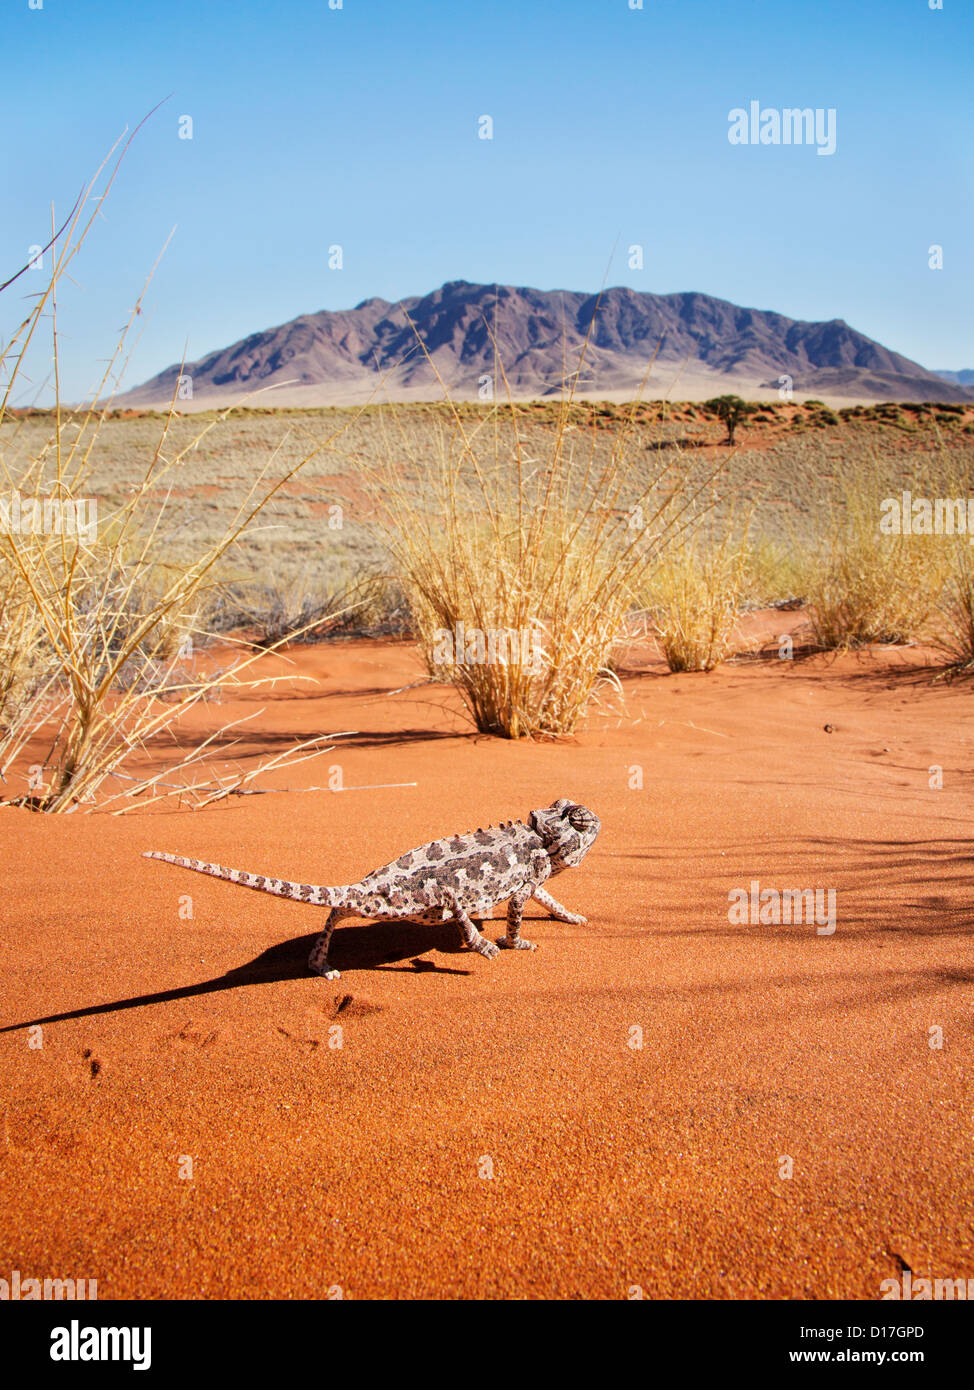 Desert chameleon in its environment in Namibia Stock Photo